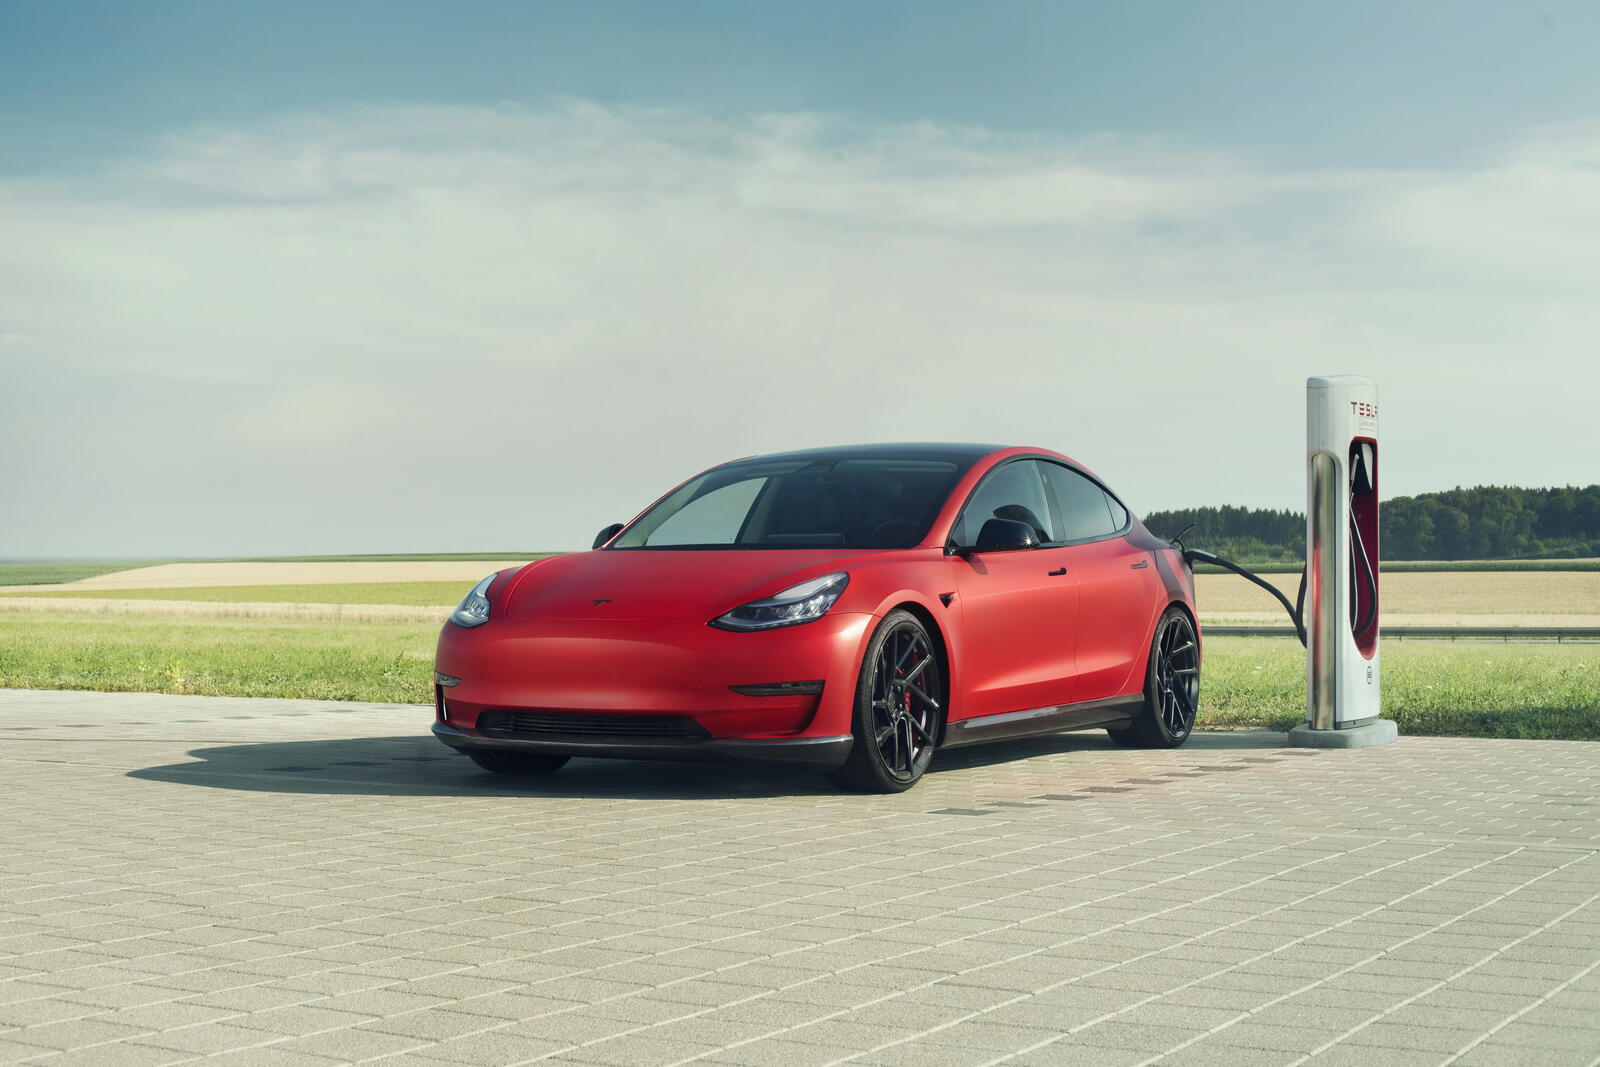 Wallpapers Tesla cars 2019 cars on the desktop